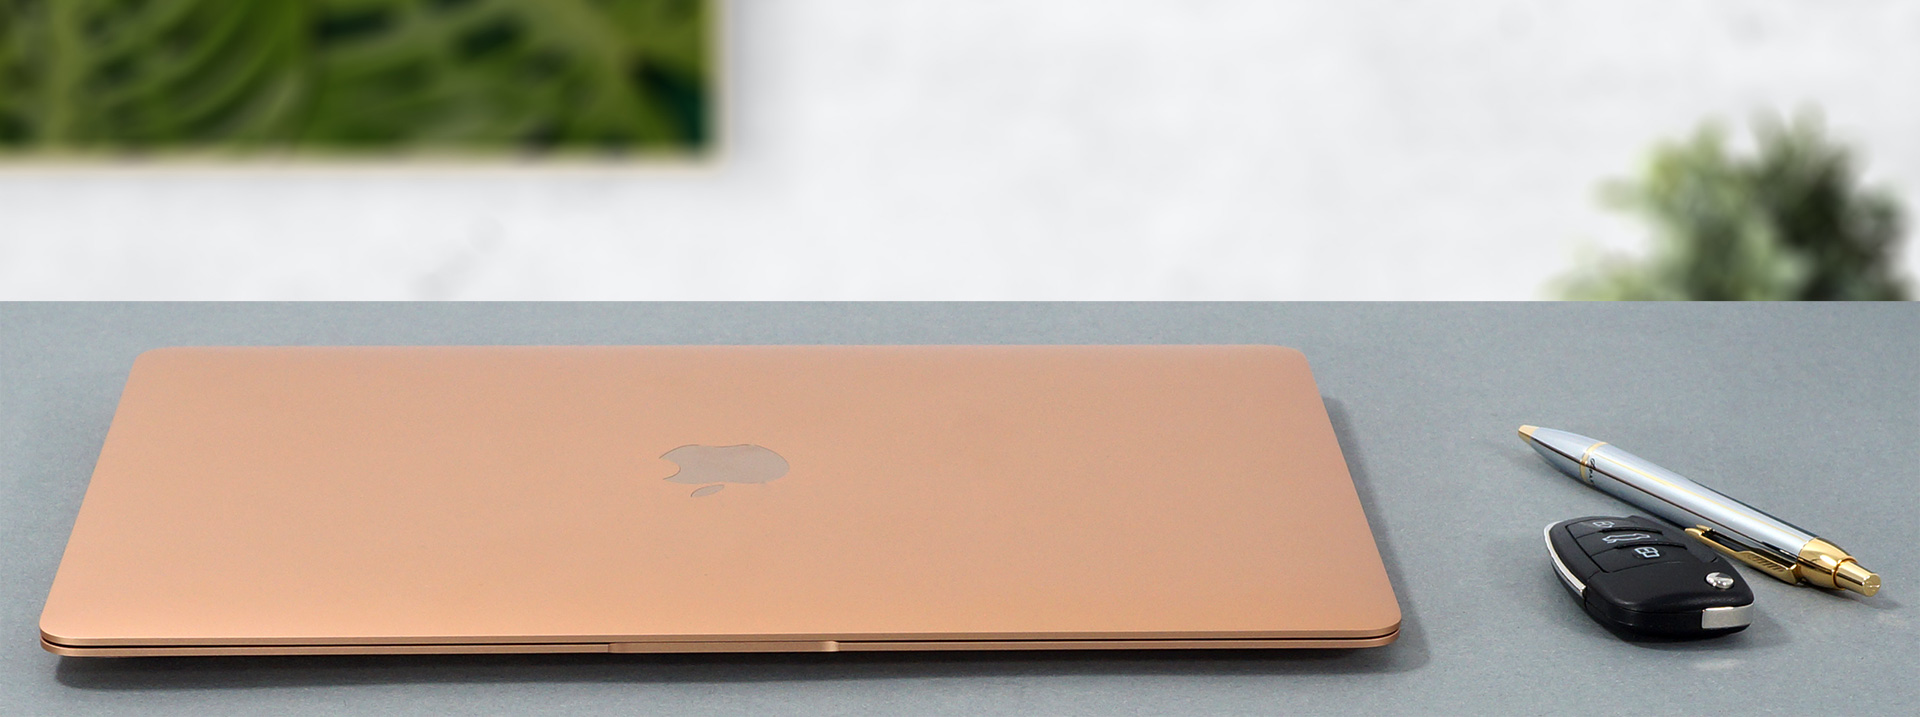 Apple MacBook Air (M1, Late 2020) review - the MacBook Air is a